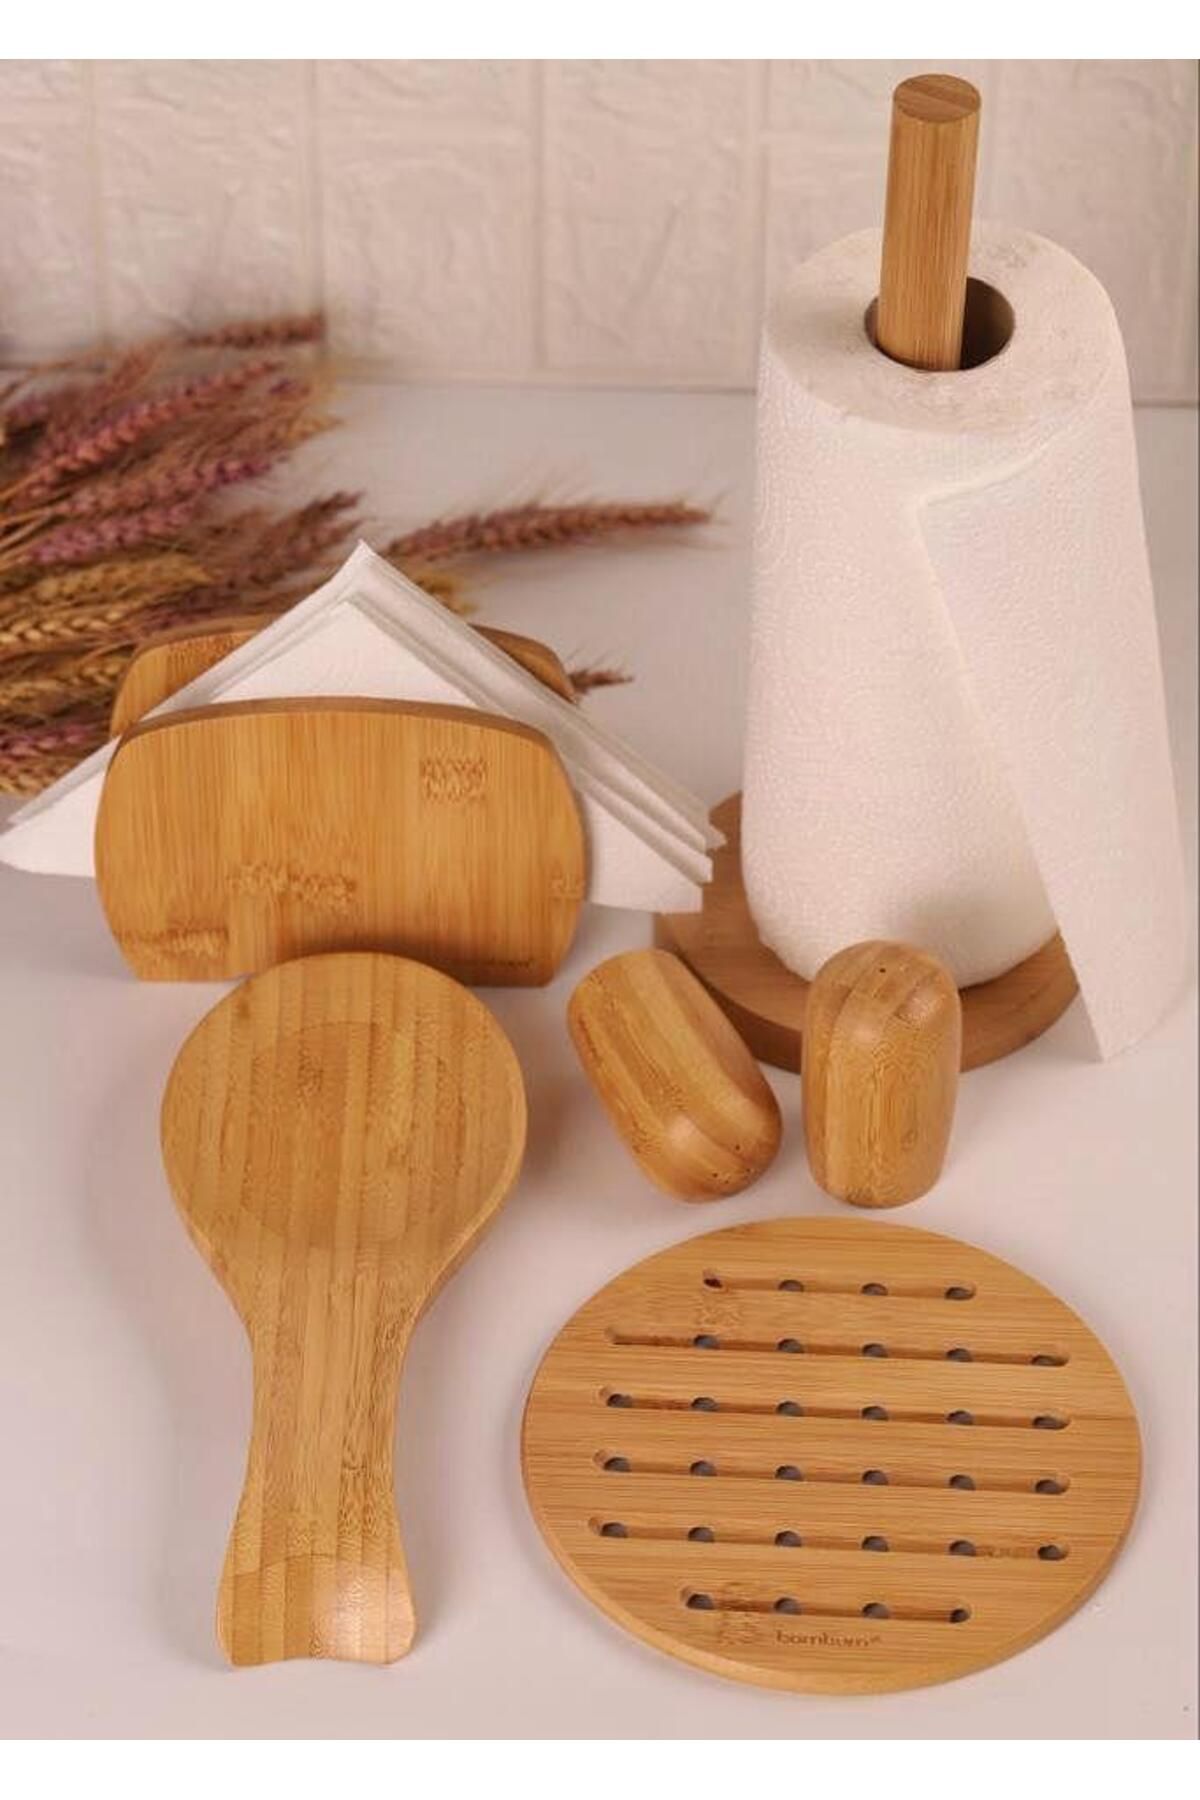 Bambum 6 Parça Tezgah Üstü Pratik Mutfak Seti - Yemek Hazırlama Servis Seti Atbyhome0327